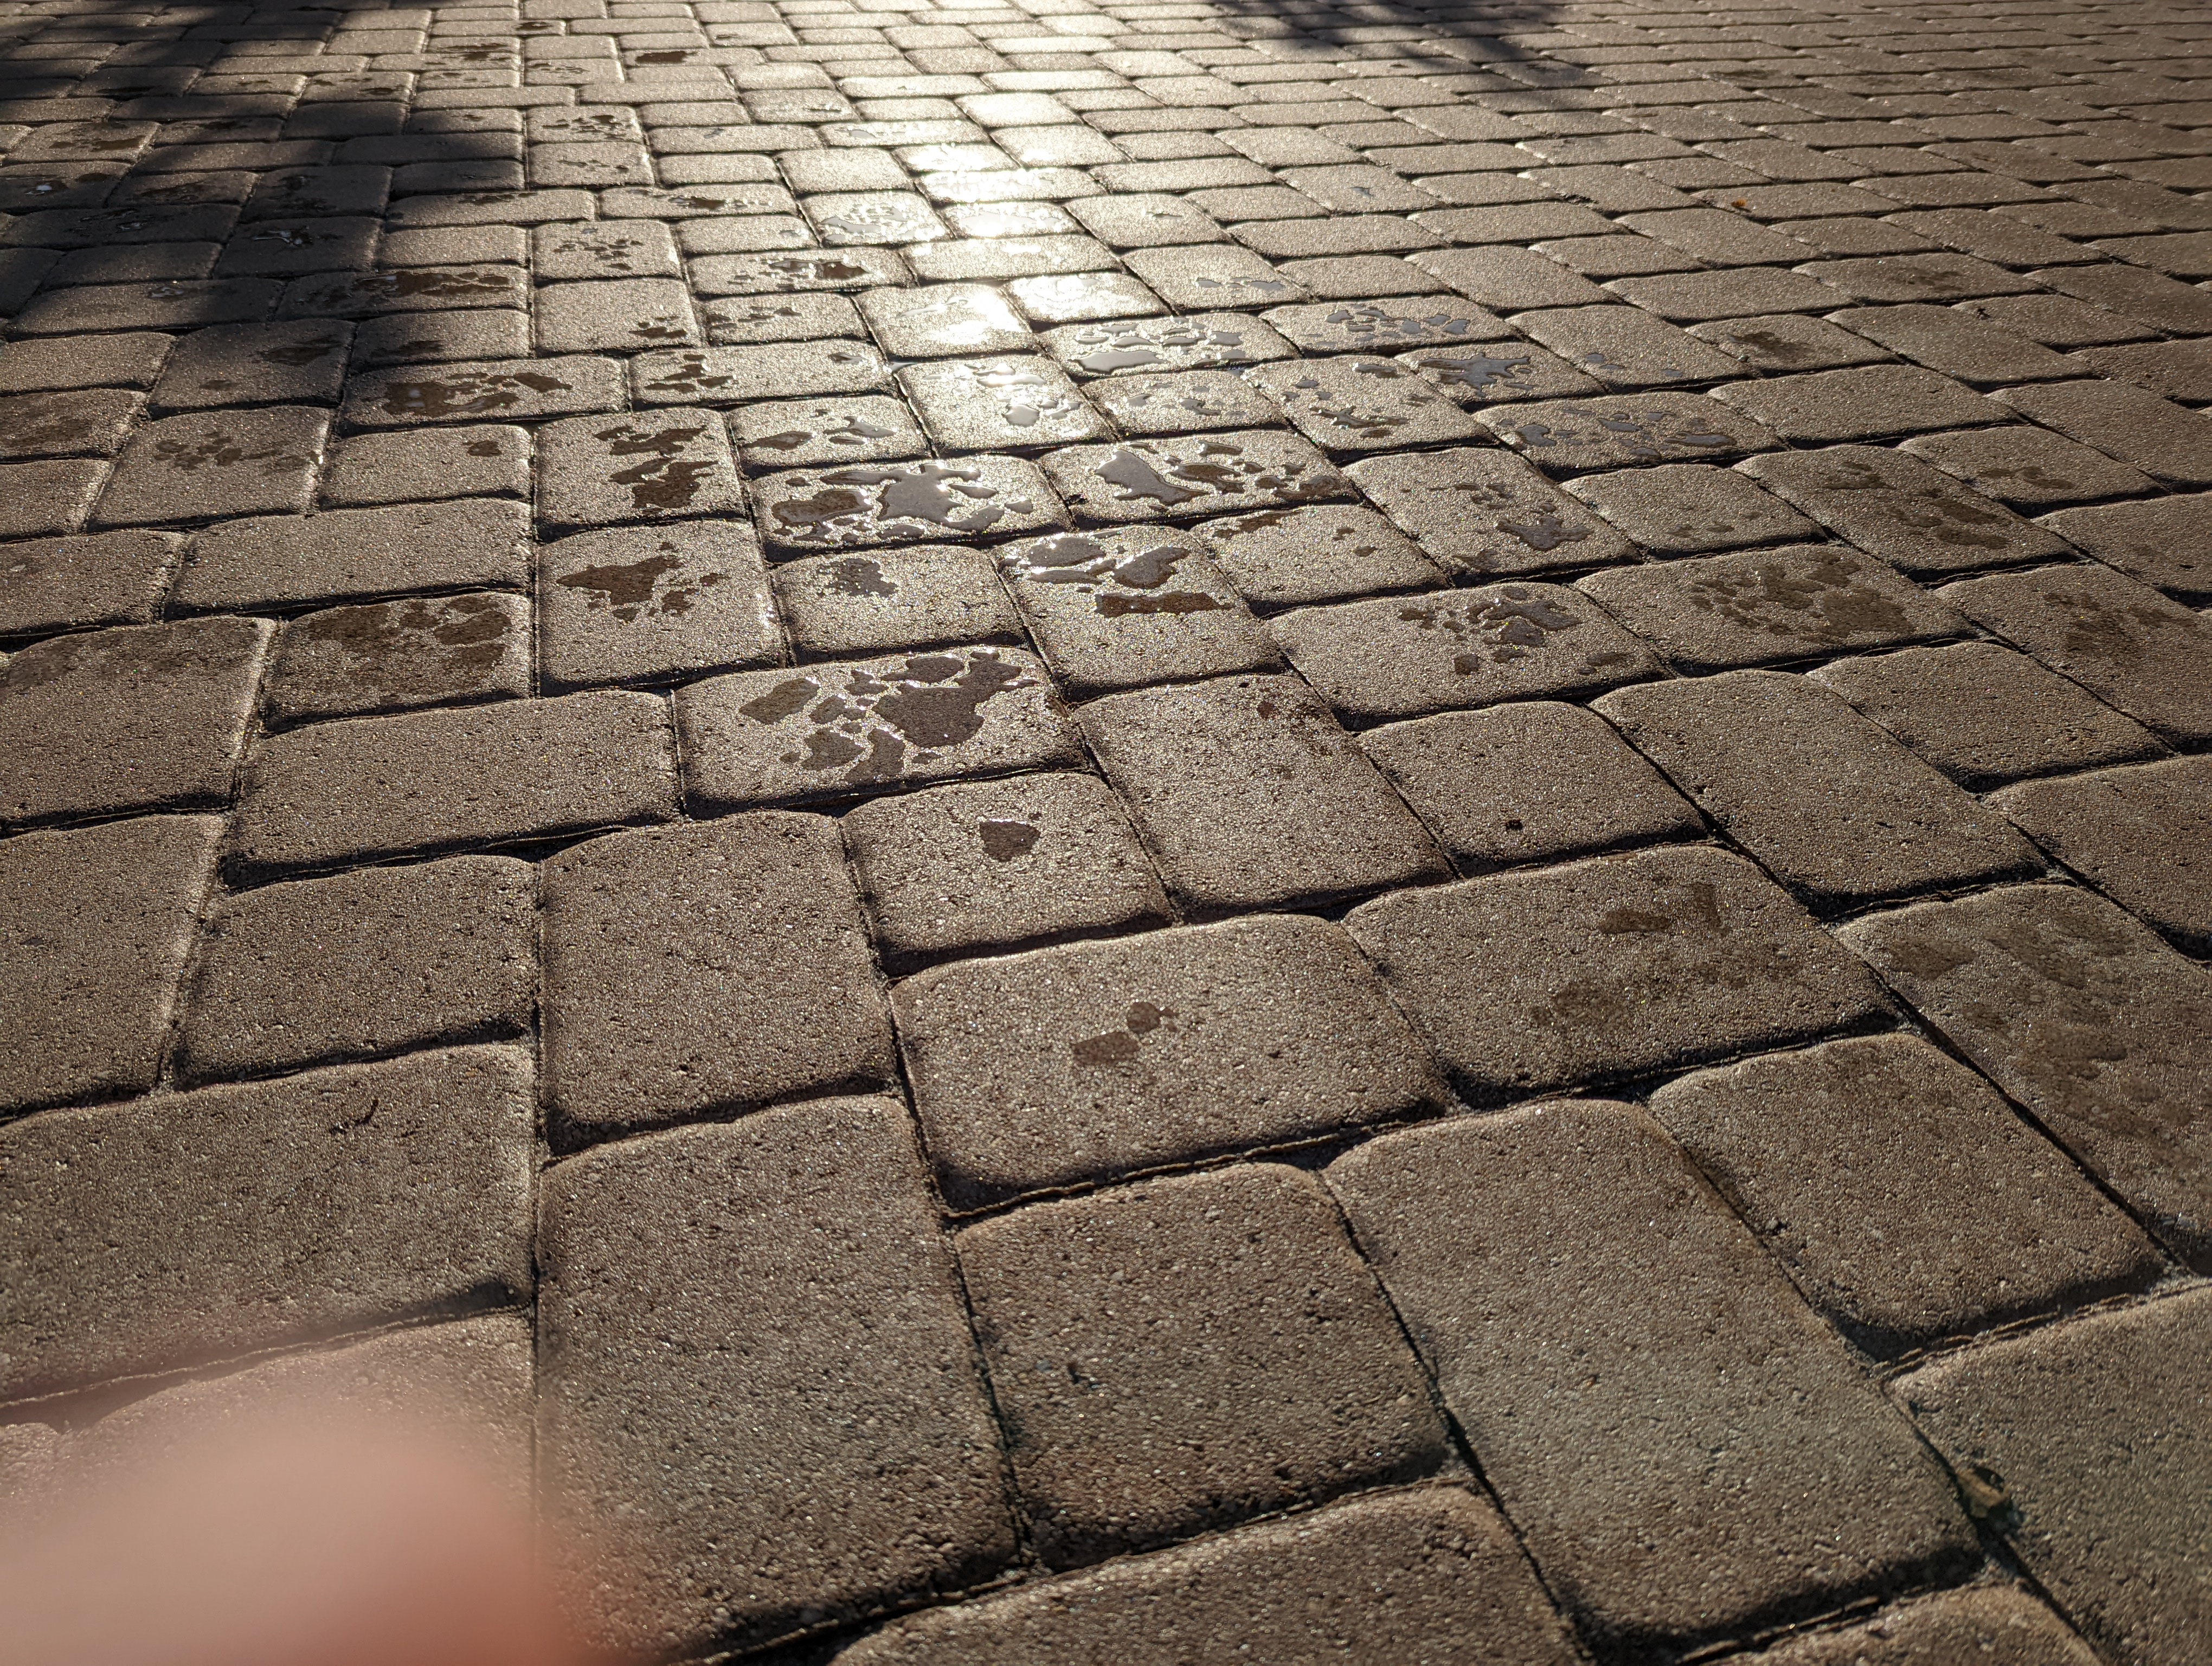 Brick pavers in the sun